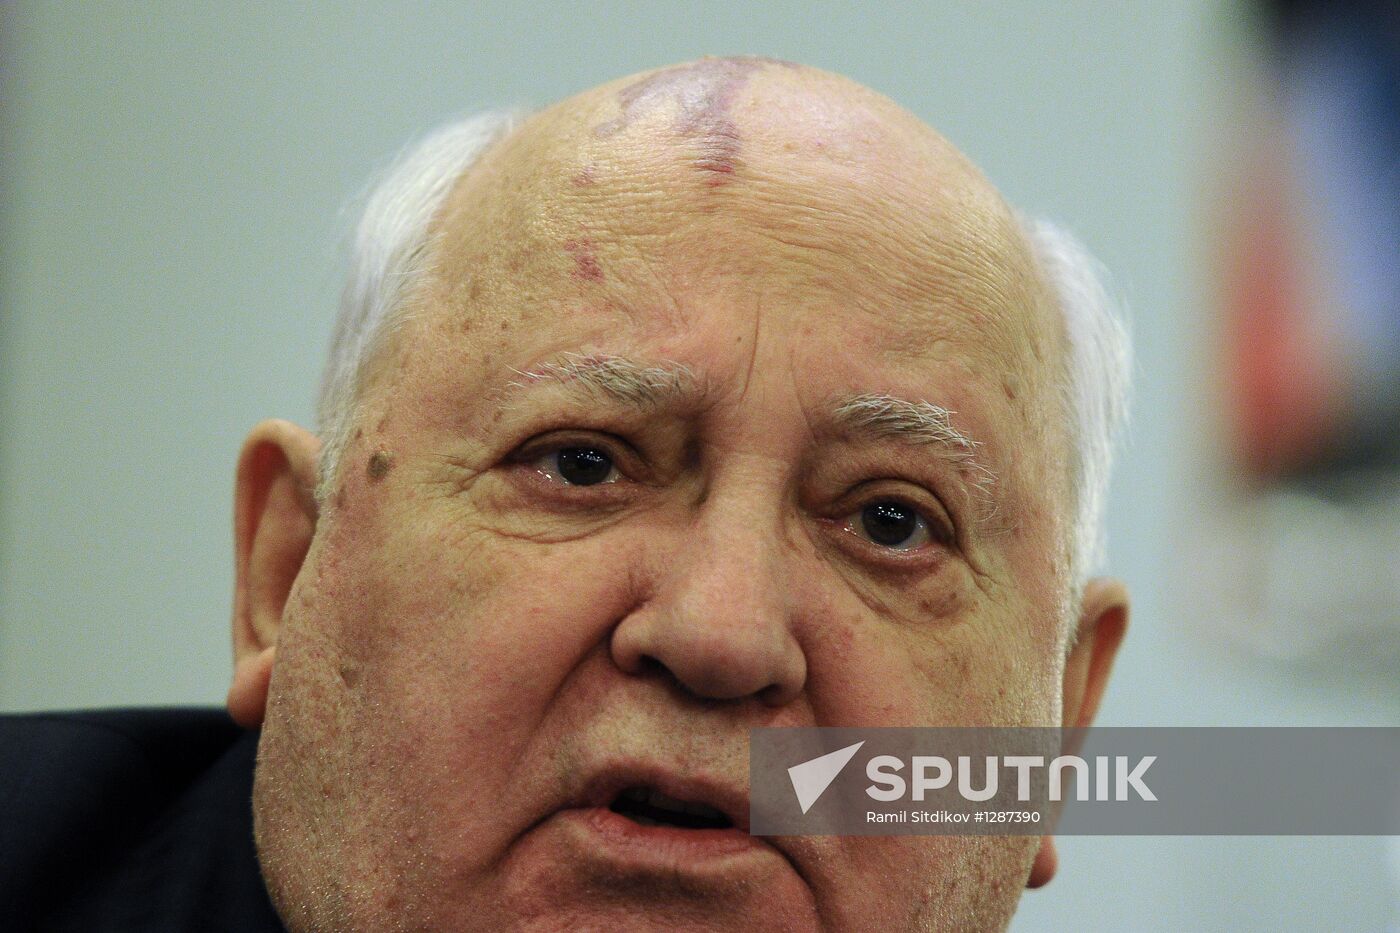 Mikhail Gorbachev presents new book "Alone with Myself"